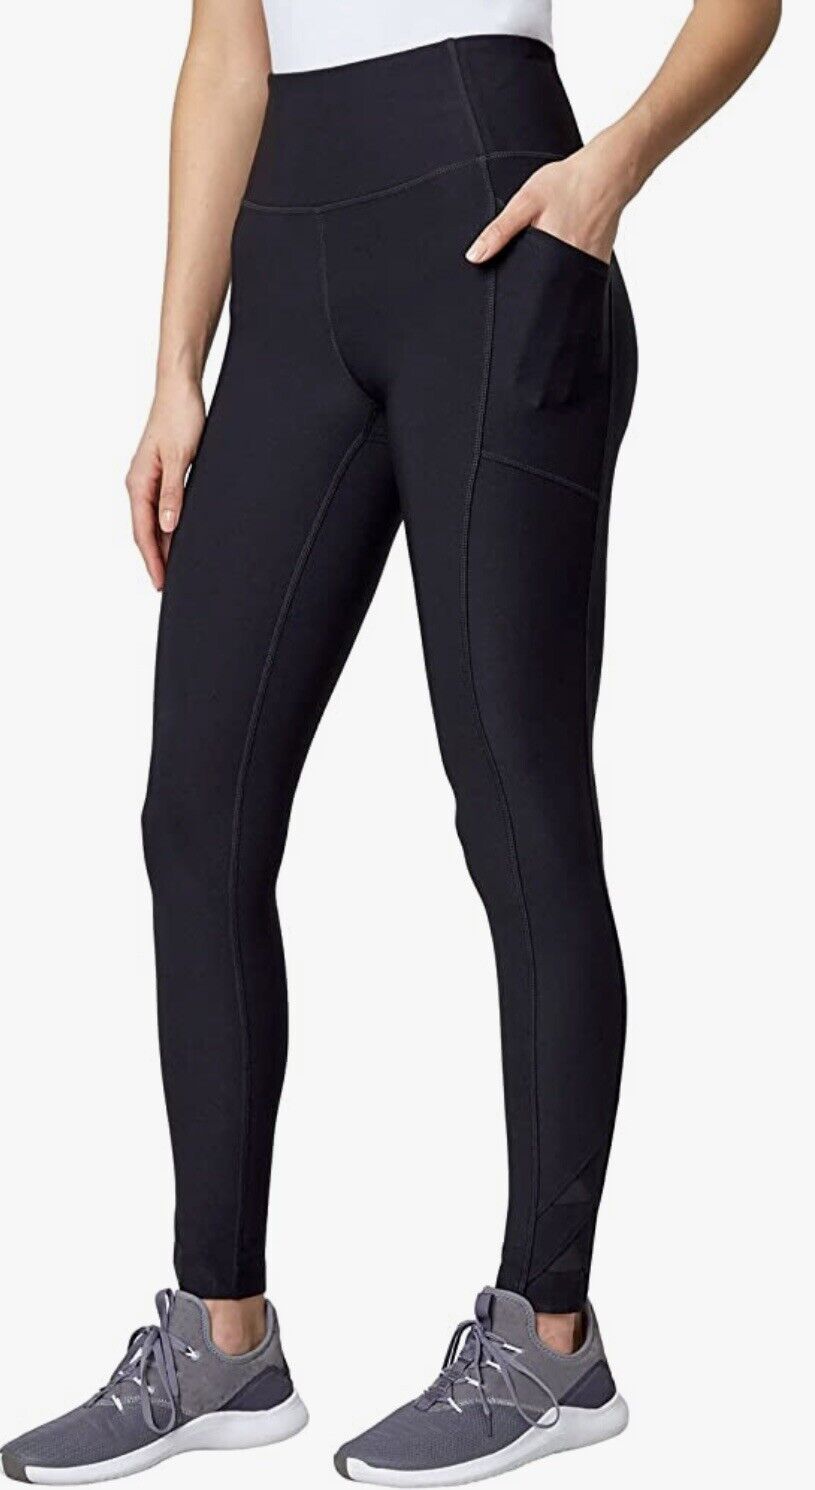 Mondetta sporty leggings with a flattering design, size L